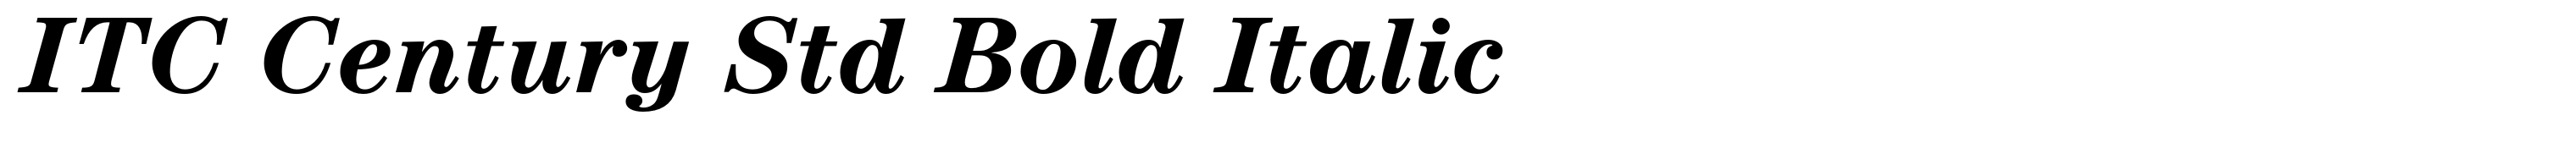 ITC Century Std Bold Italic